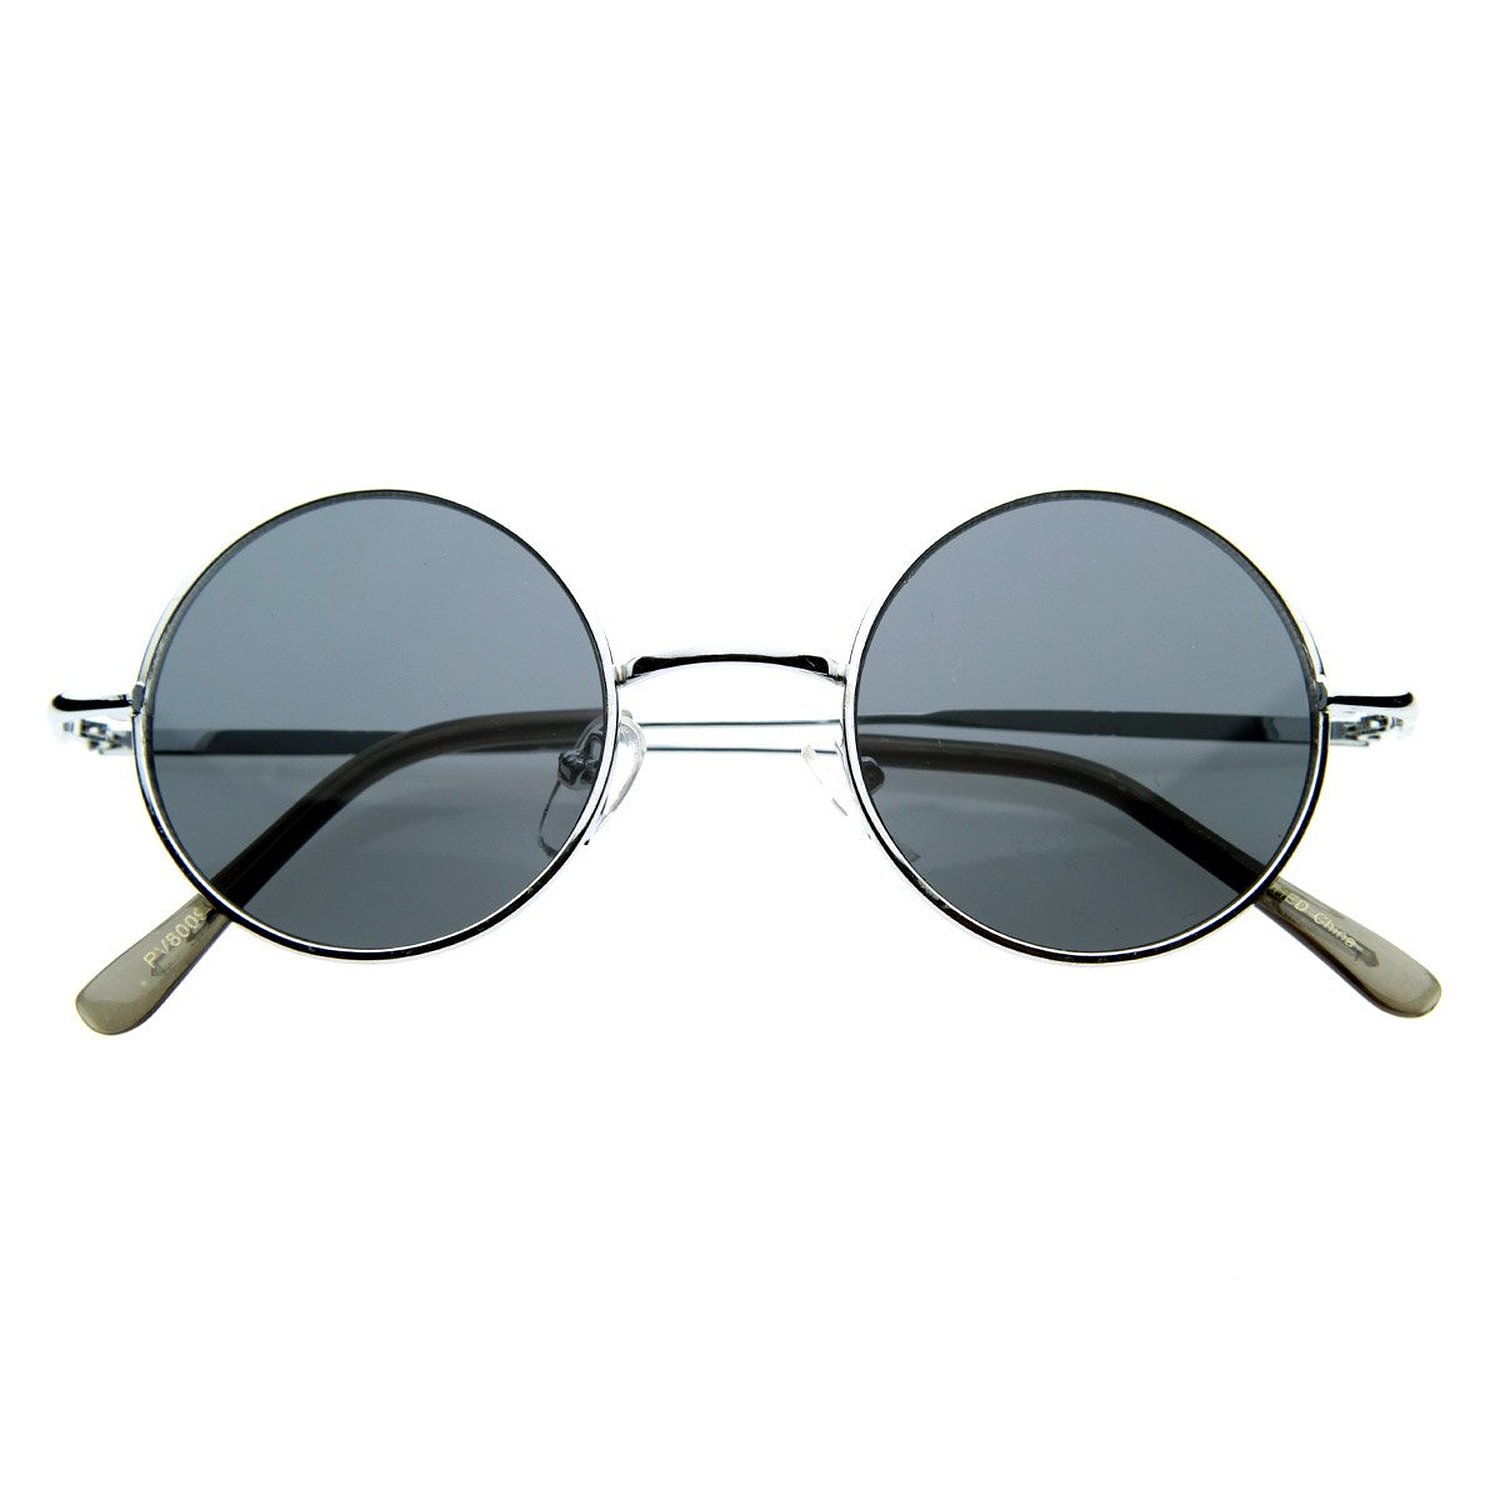 zeroUV - Small Retro-Vintage Style Lennon Inspired Round Metal Circle Sunglasses